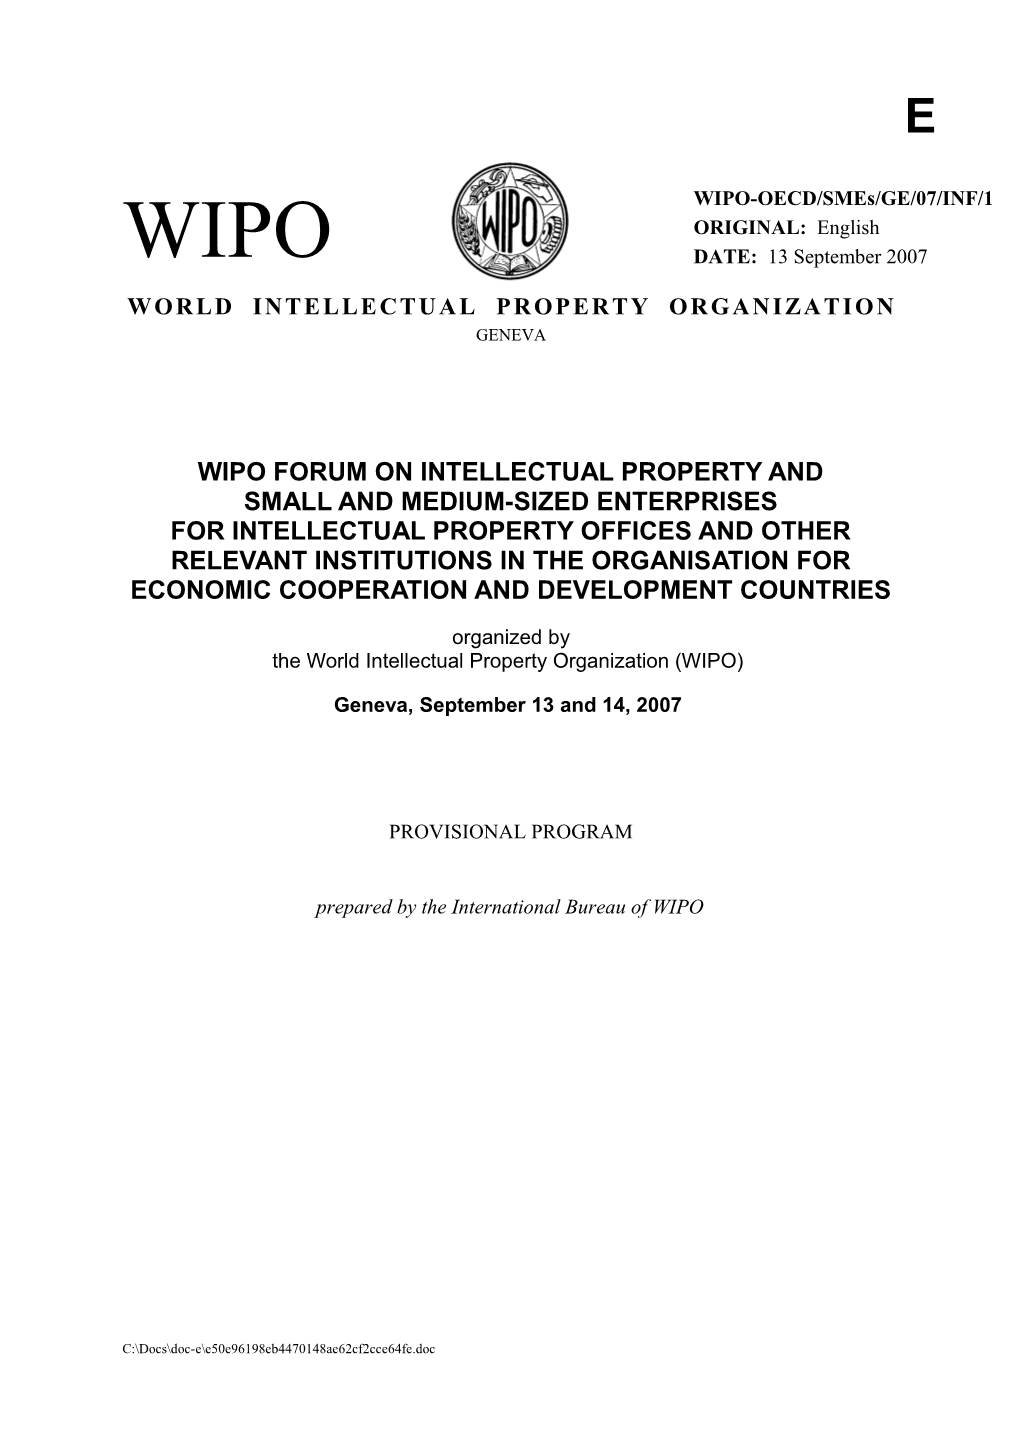 WIPO-OECD/SMES/GE/07/: Provisional Program